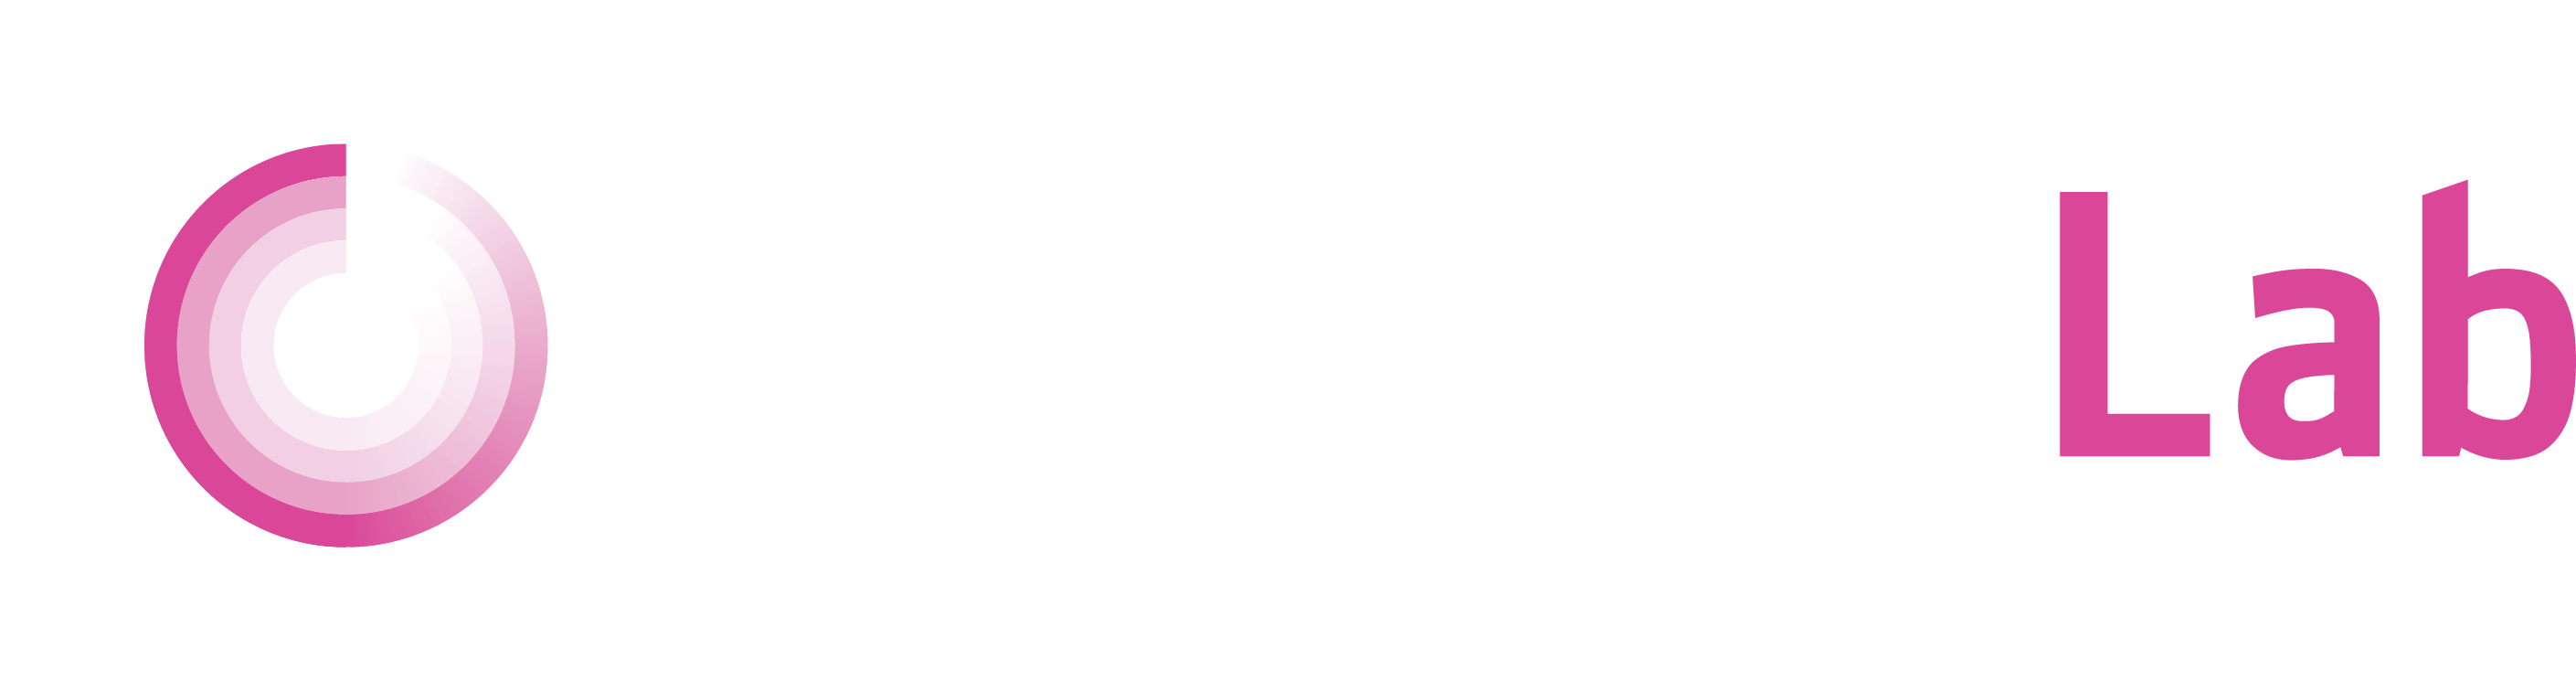 Metropolilab logo white